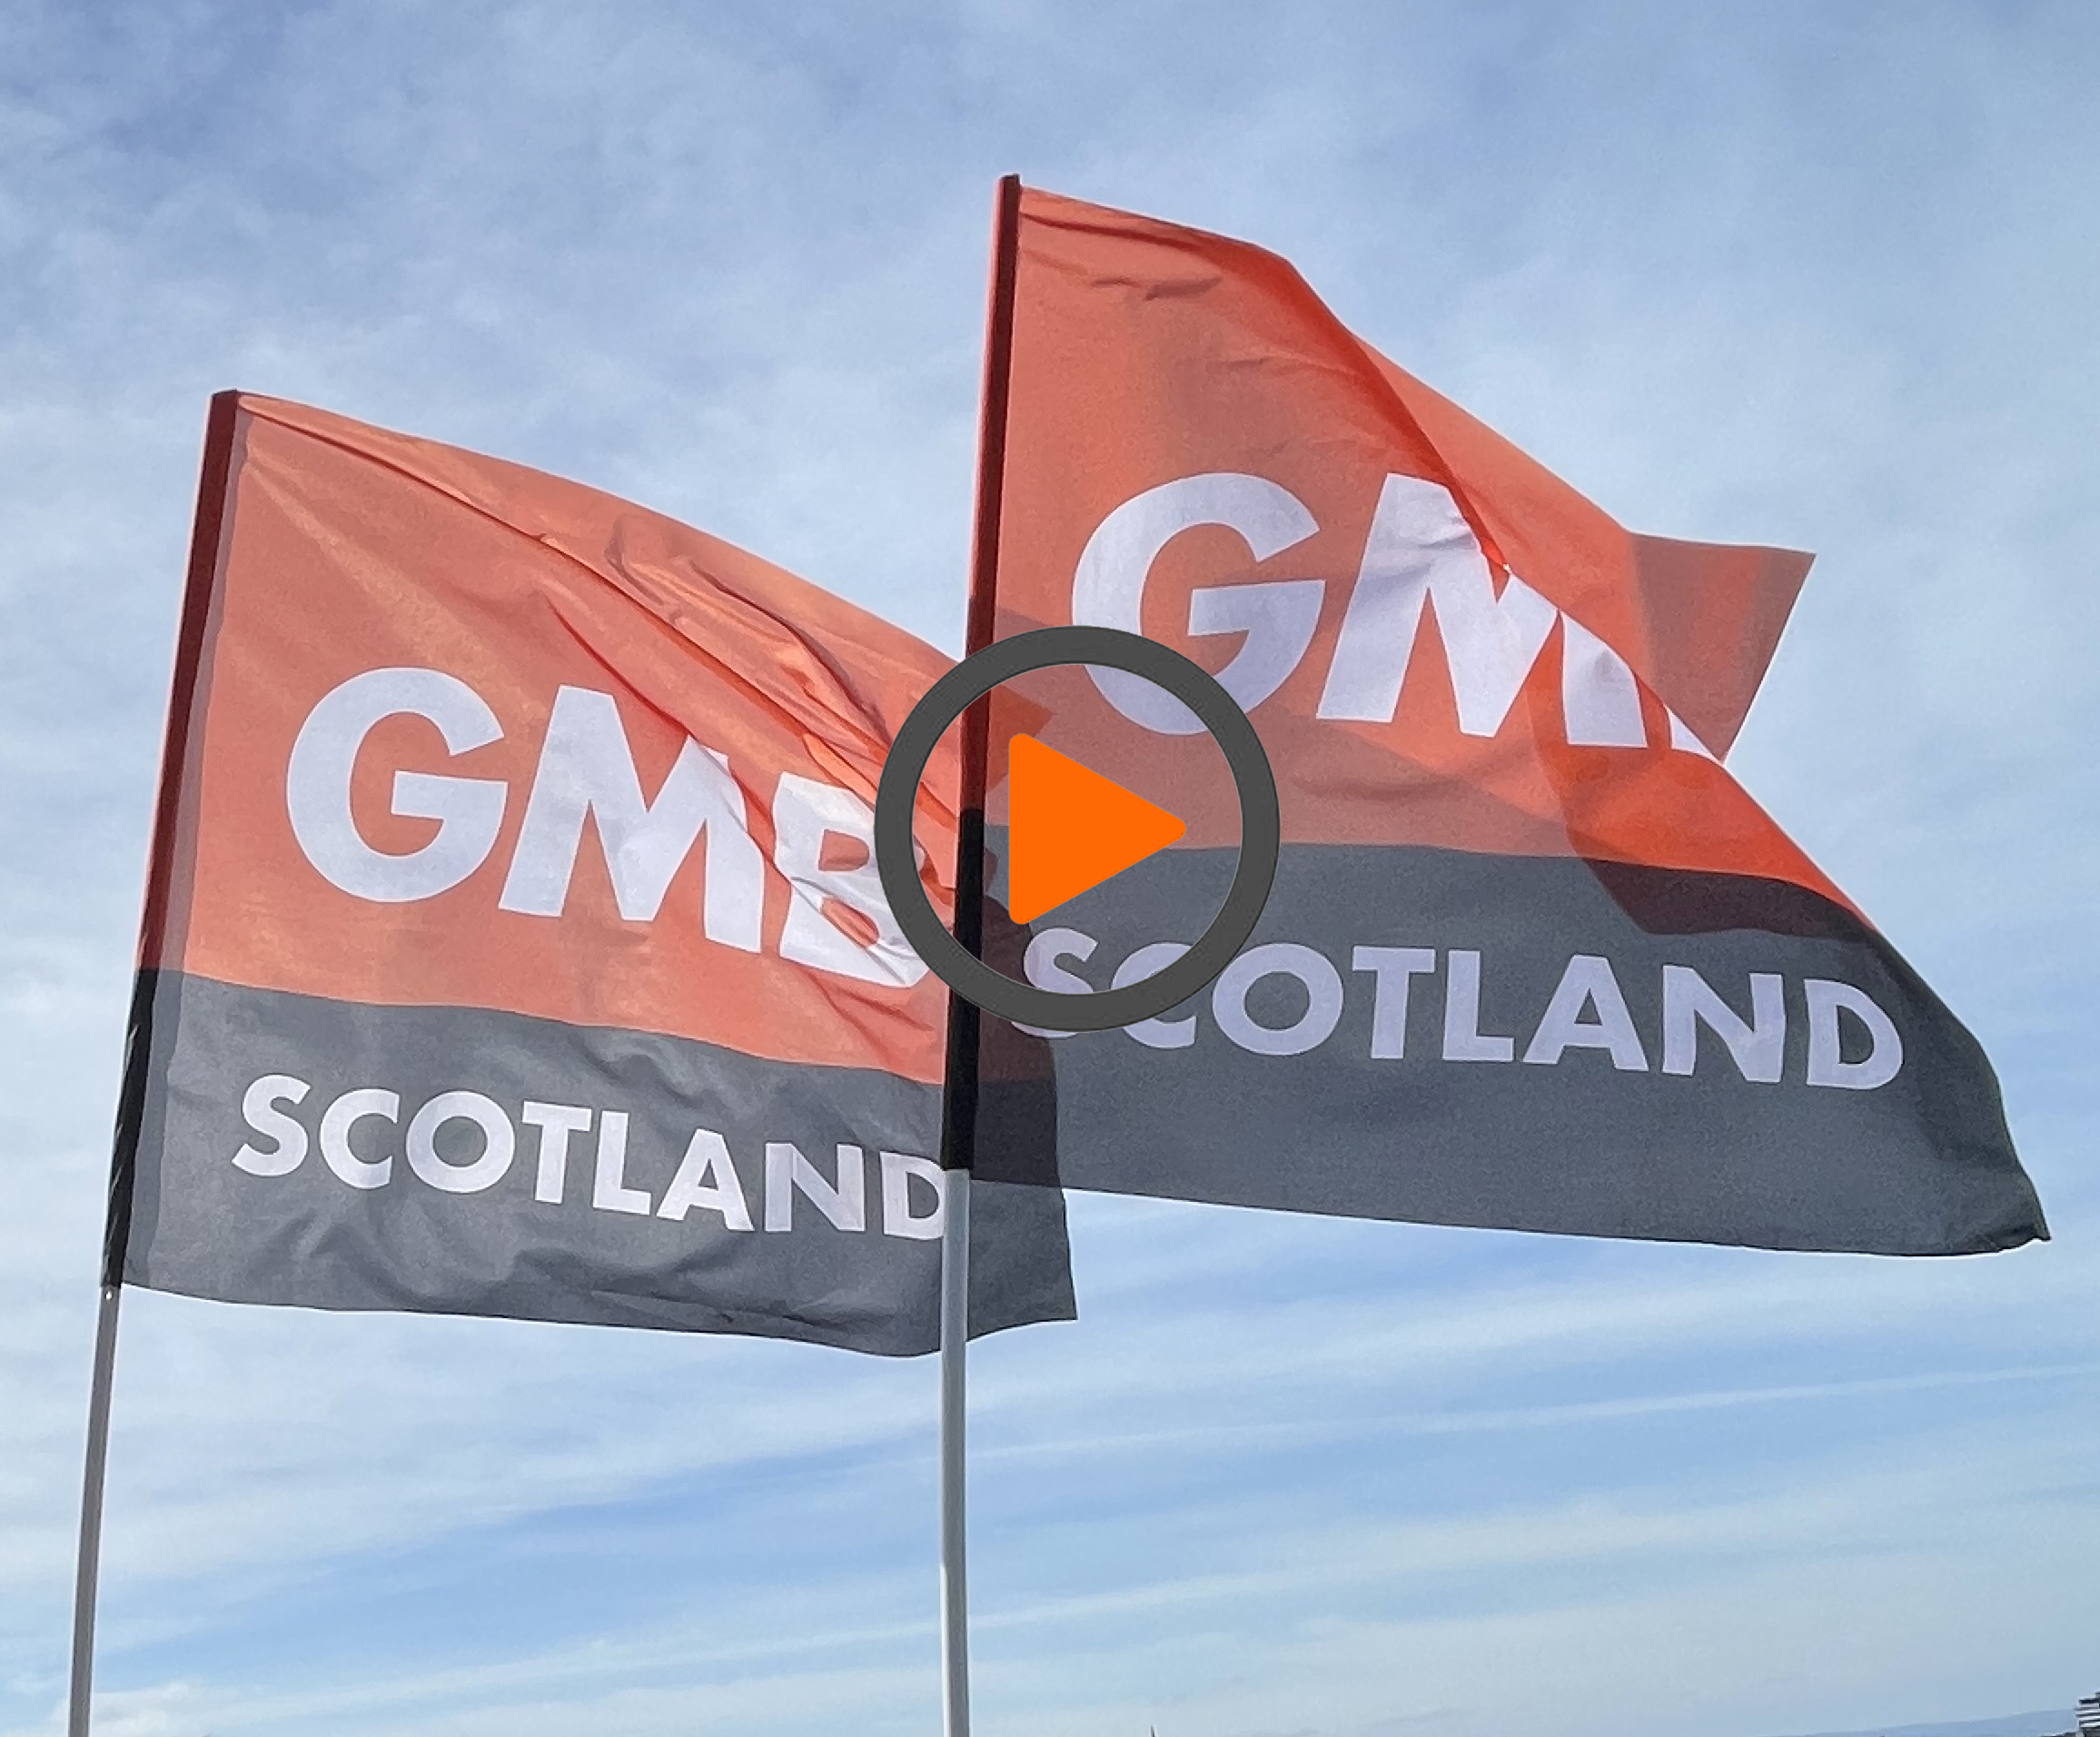 GMb Scotland flags